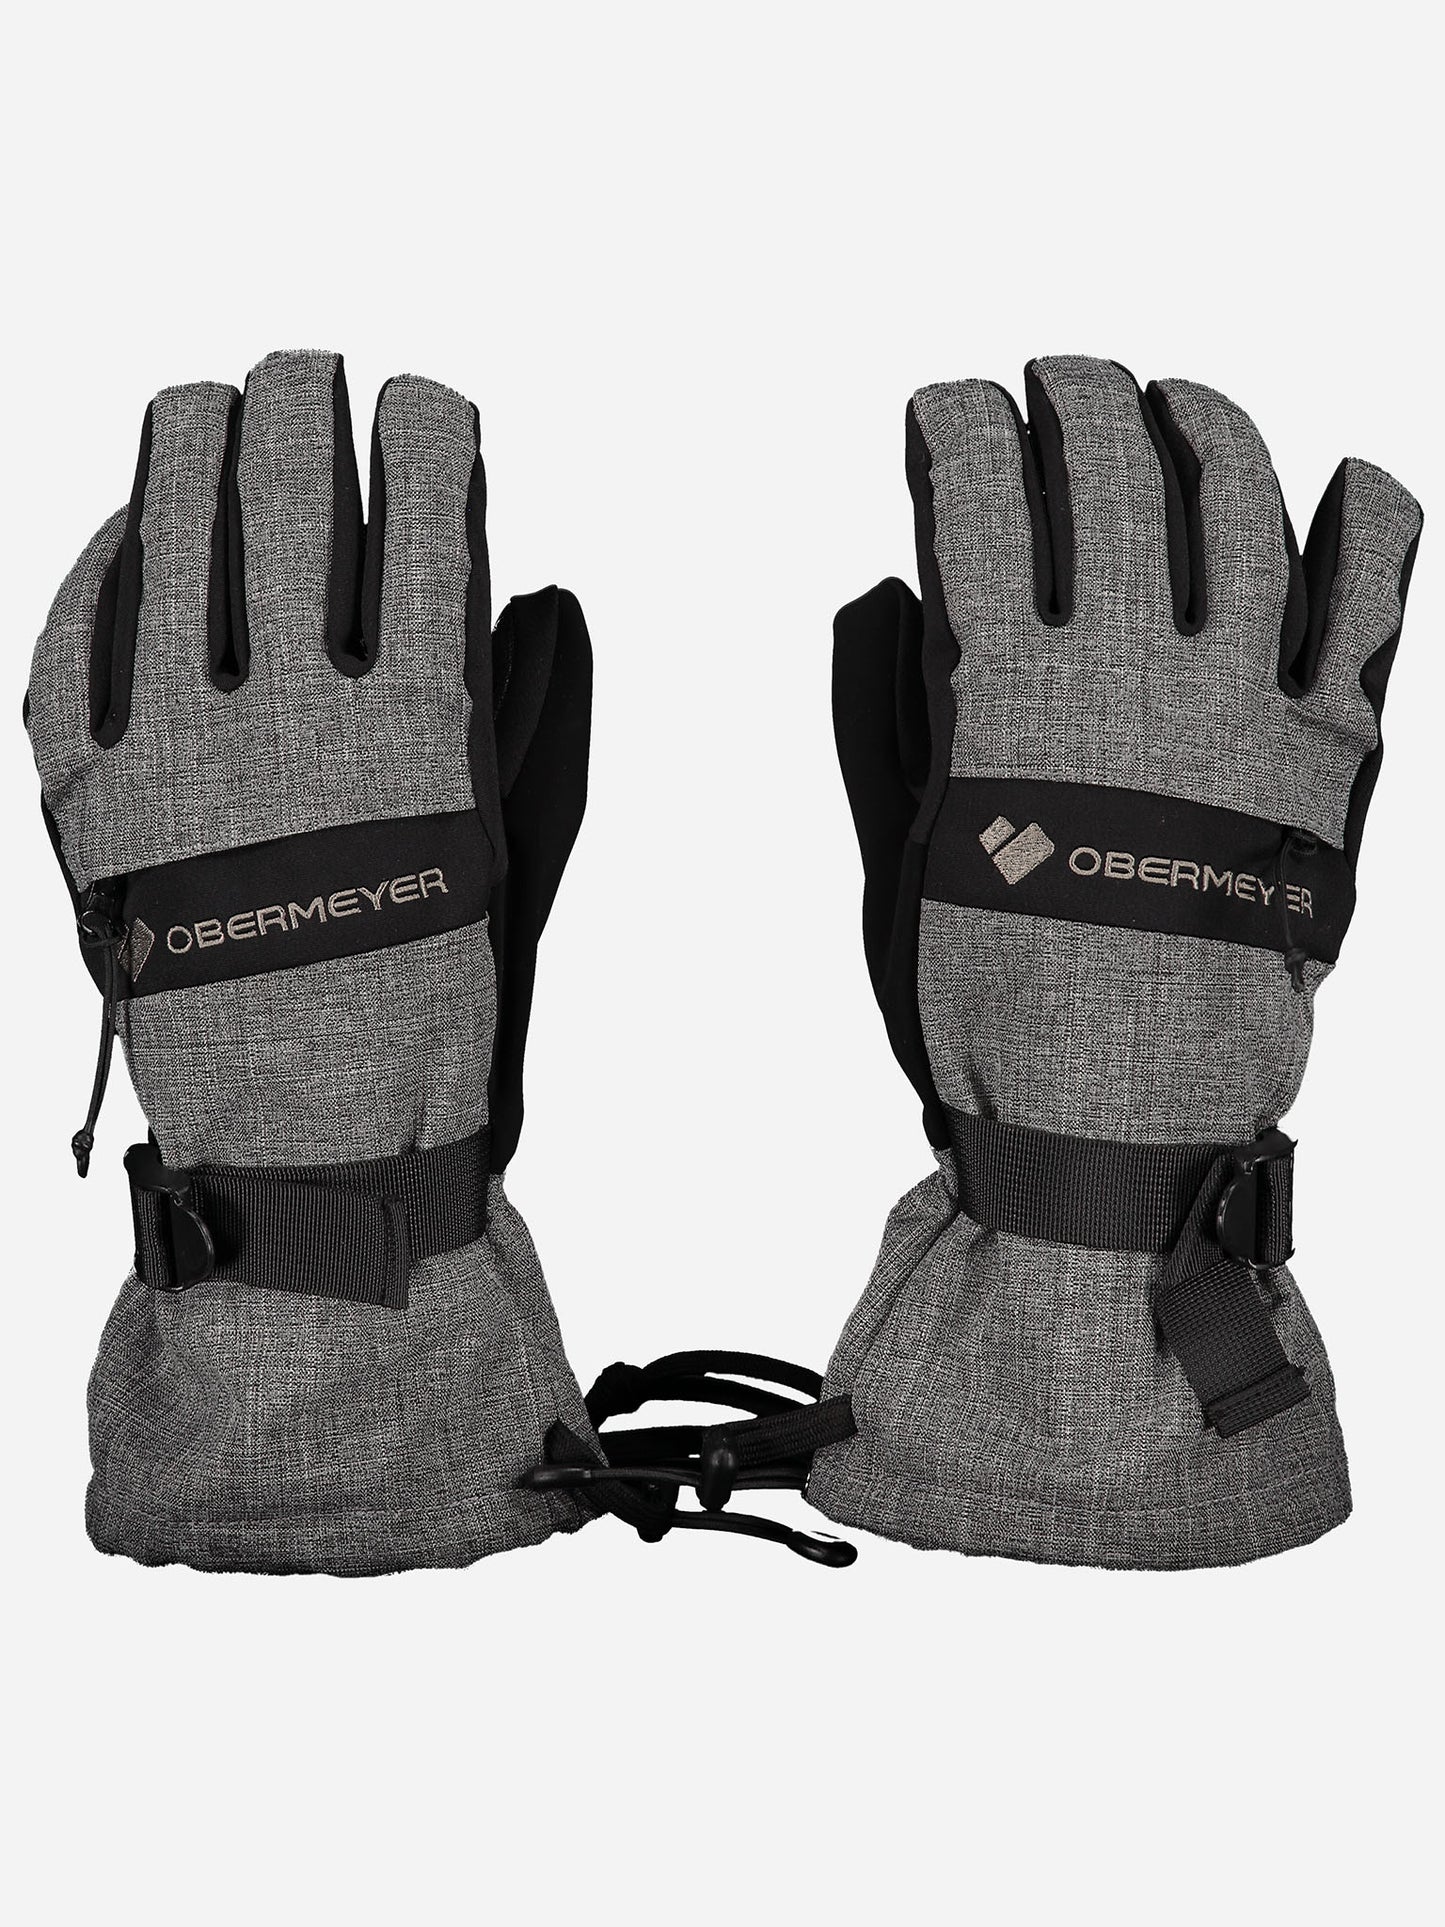 Obermeyer Men's Regulator Glove